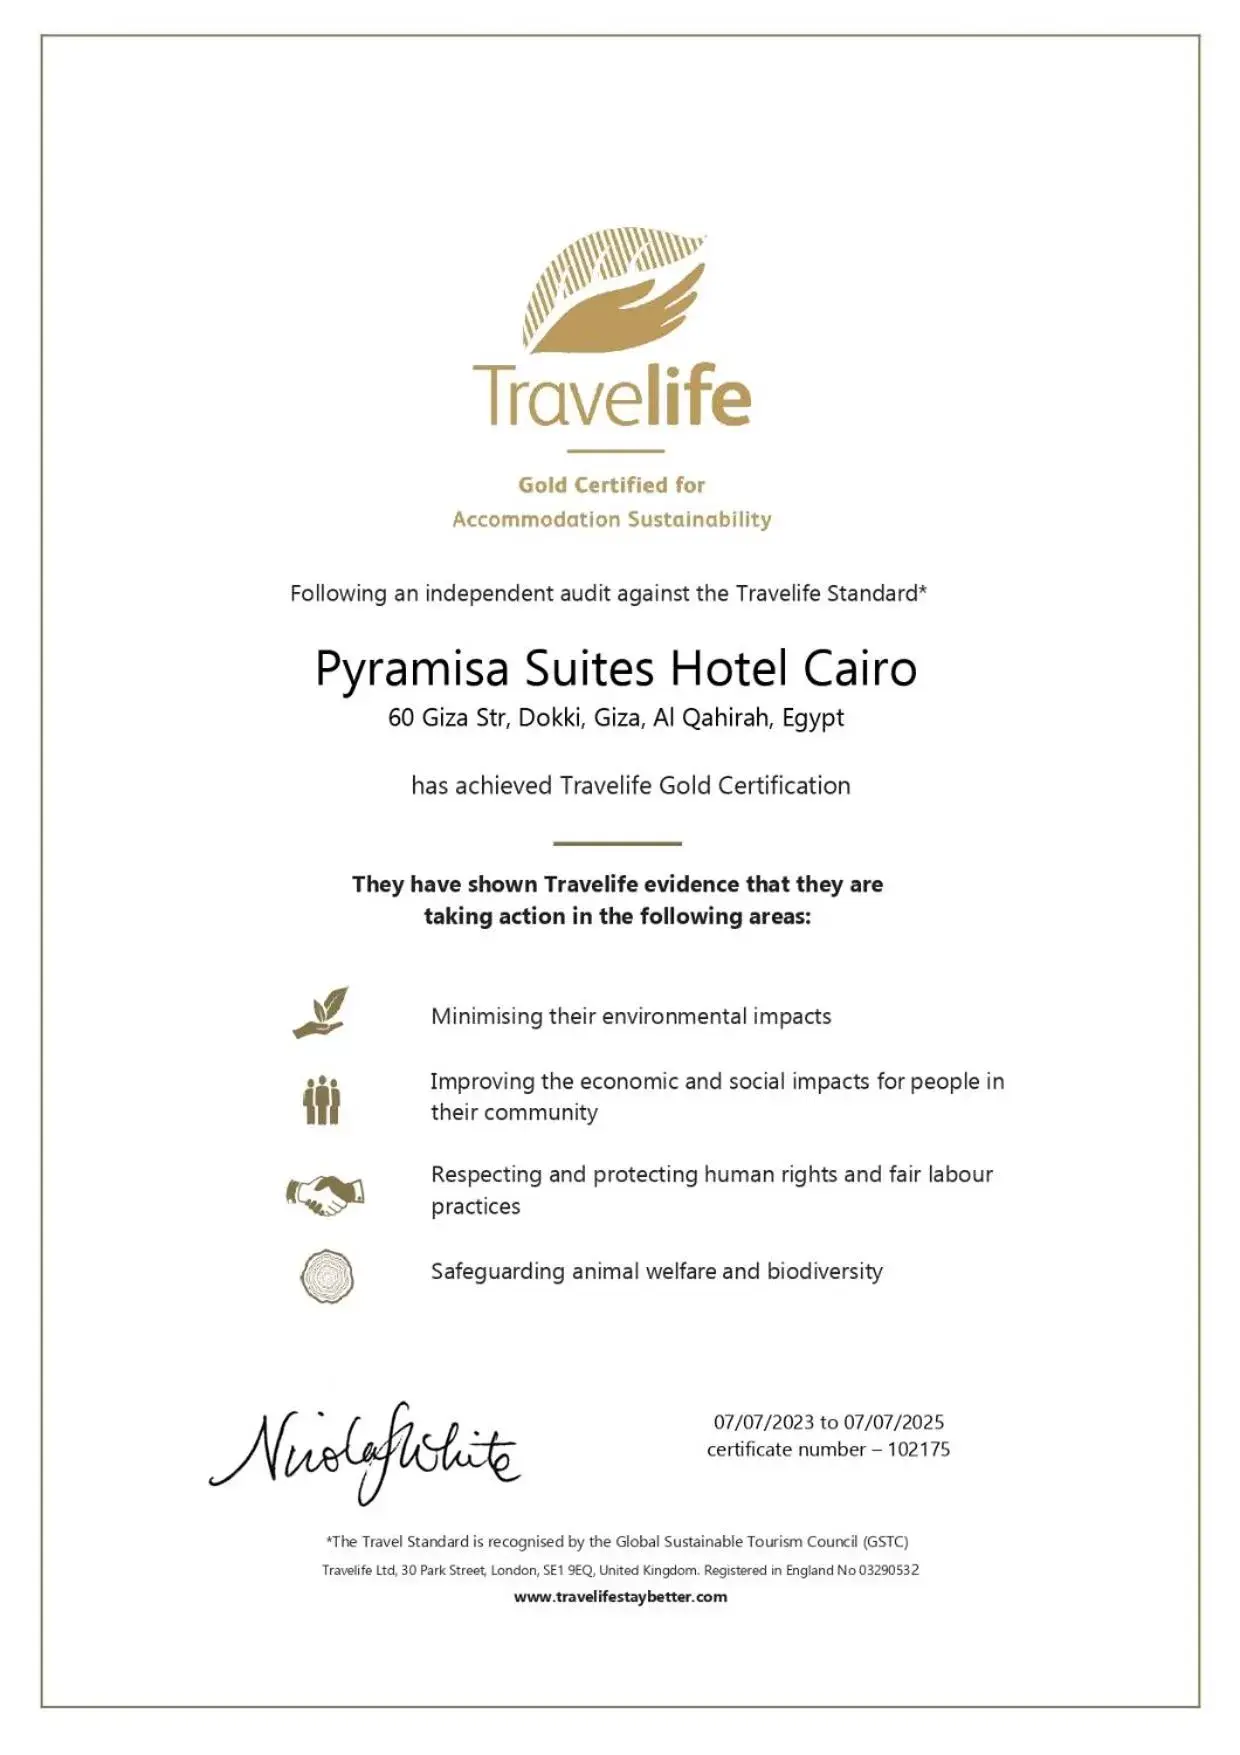 Certificate/Award in Pyramisa Suites Hotel Cairo